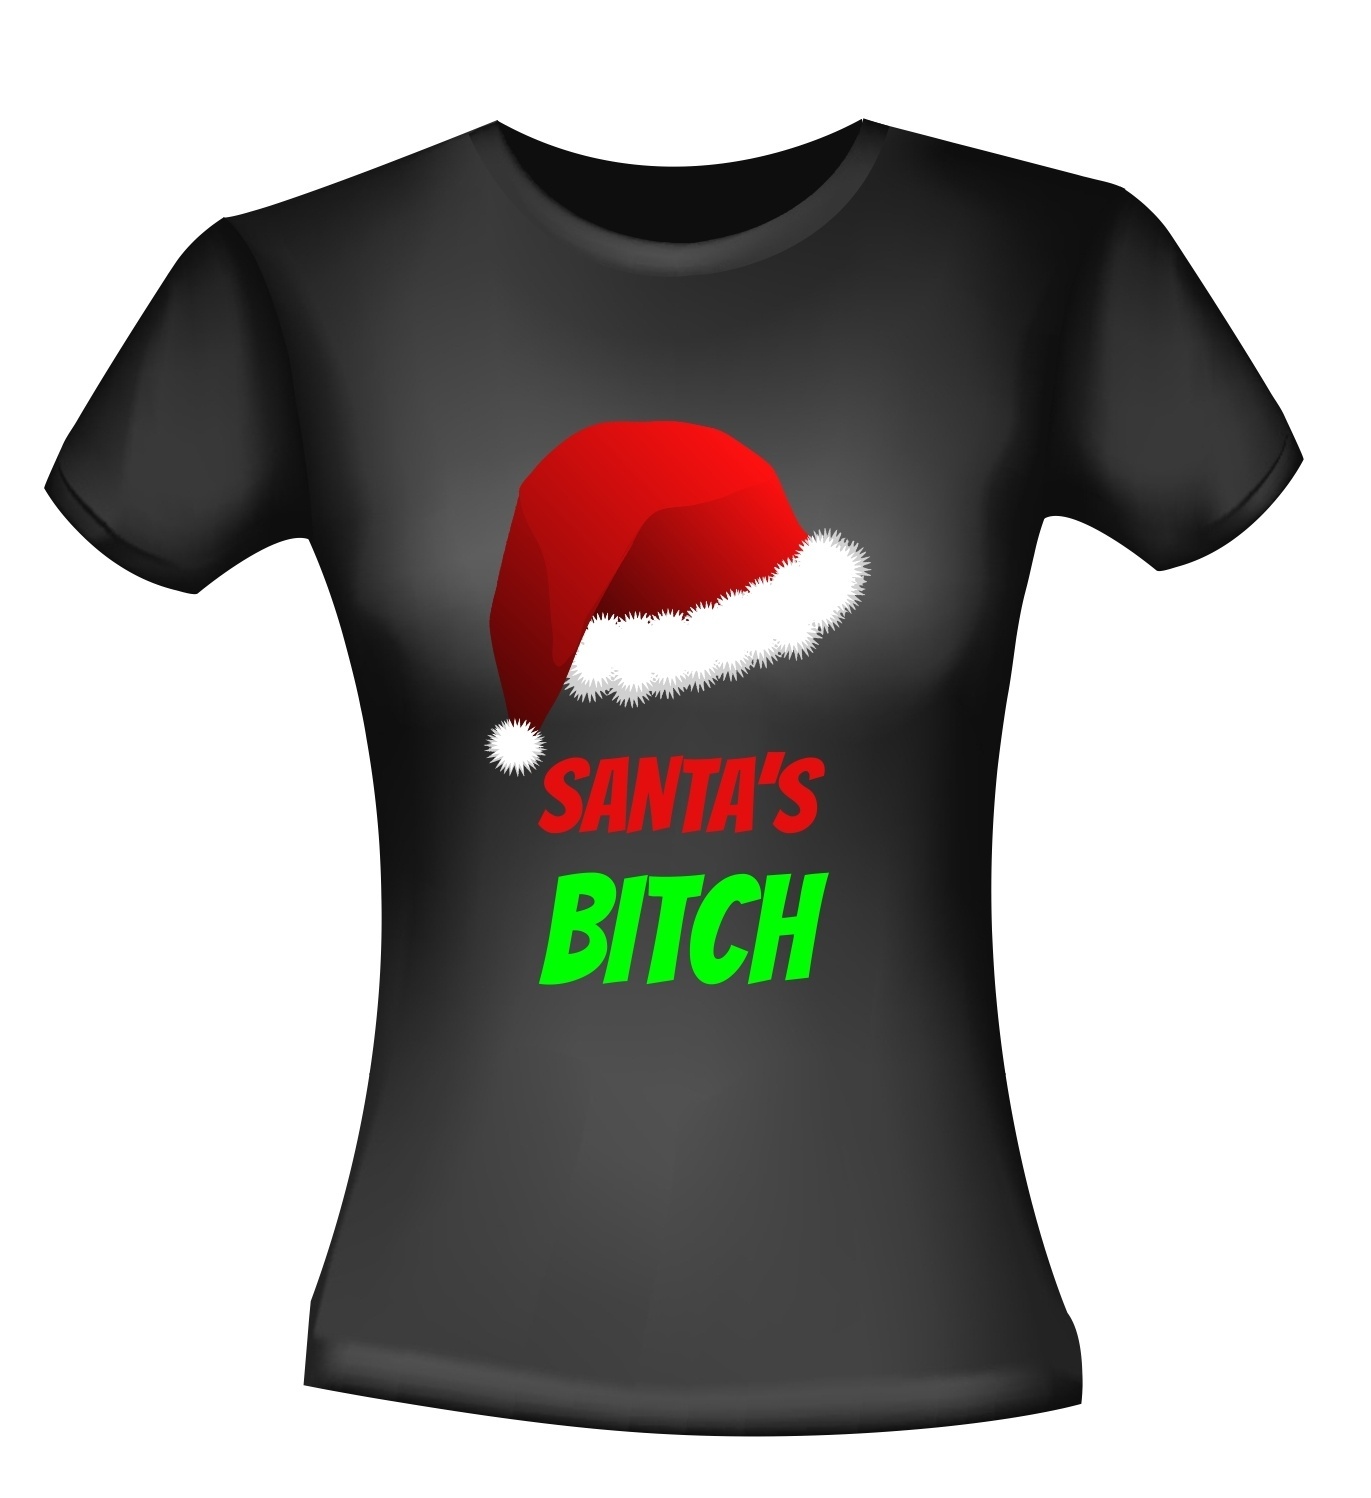 Santa's bitch T-shirt